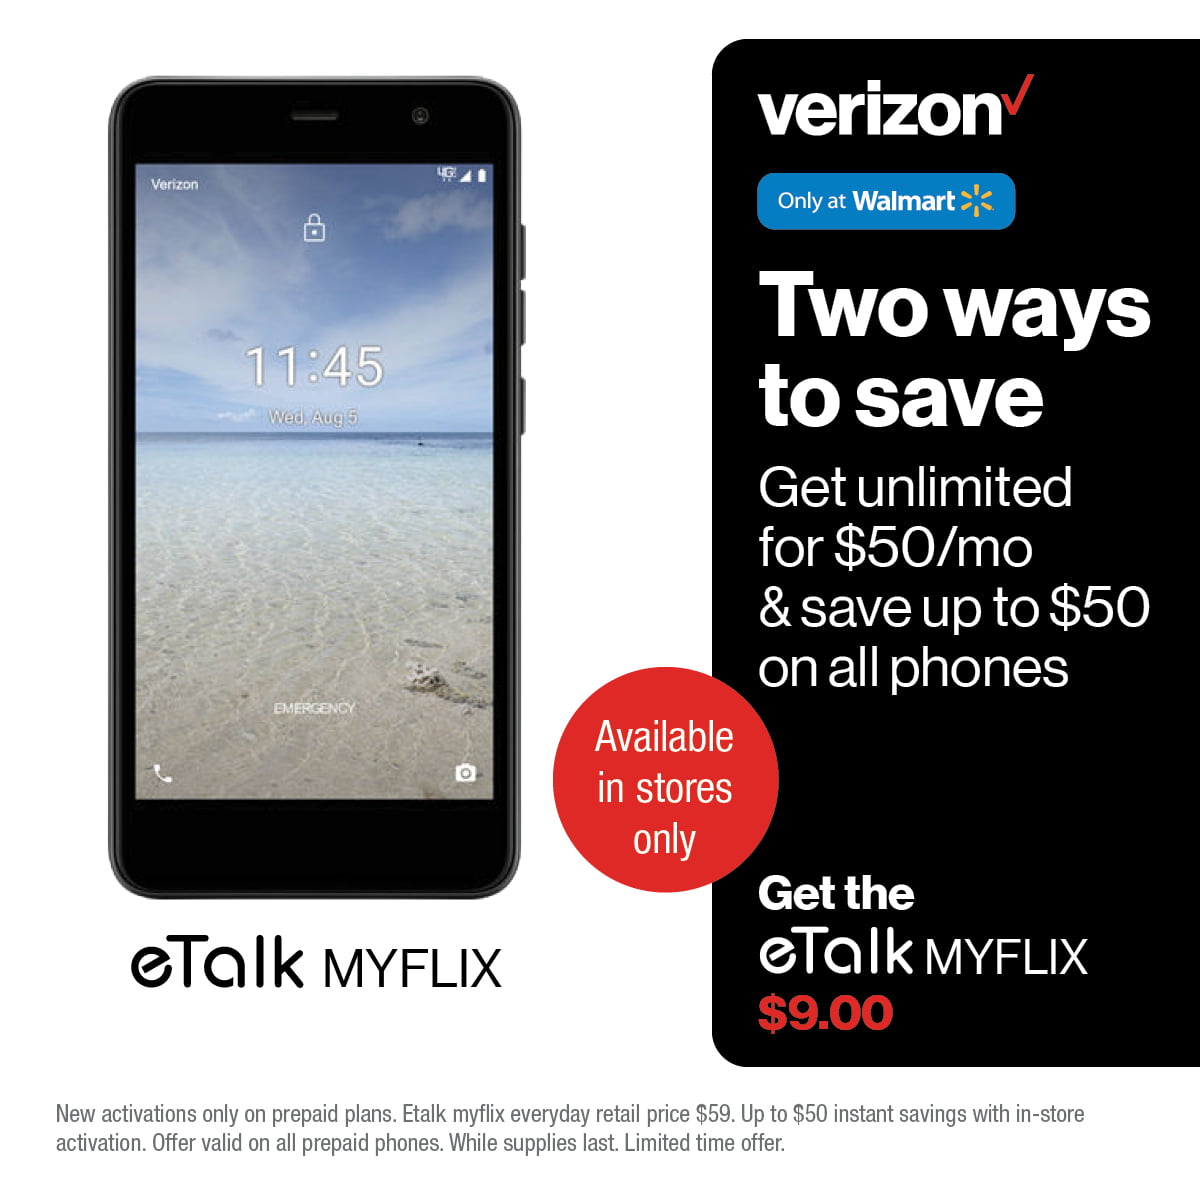 Verizon Wireless Freetel eTalk Prepaid Flip Phone - Walmart.com